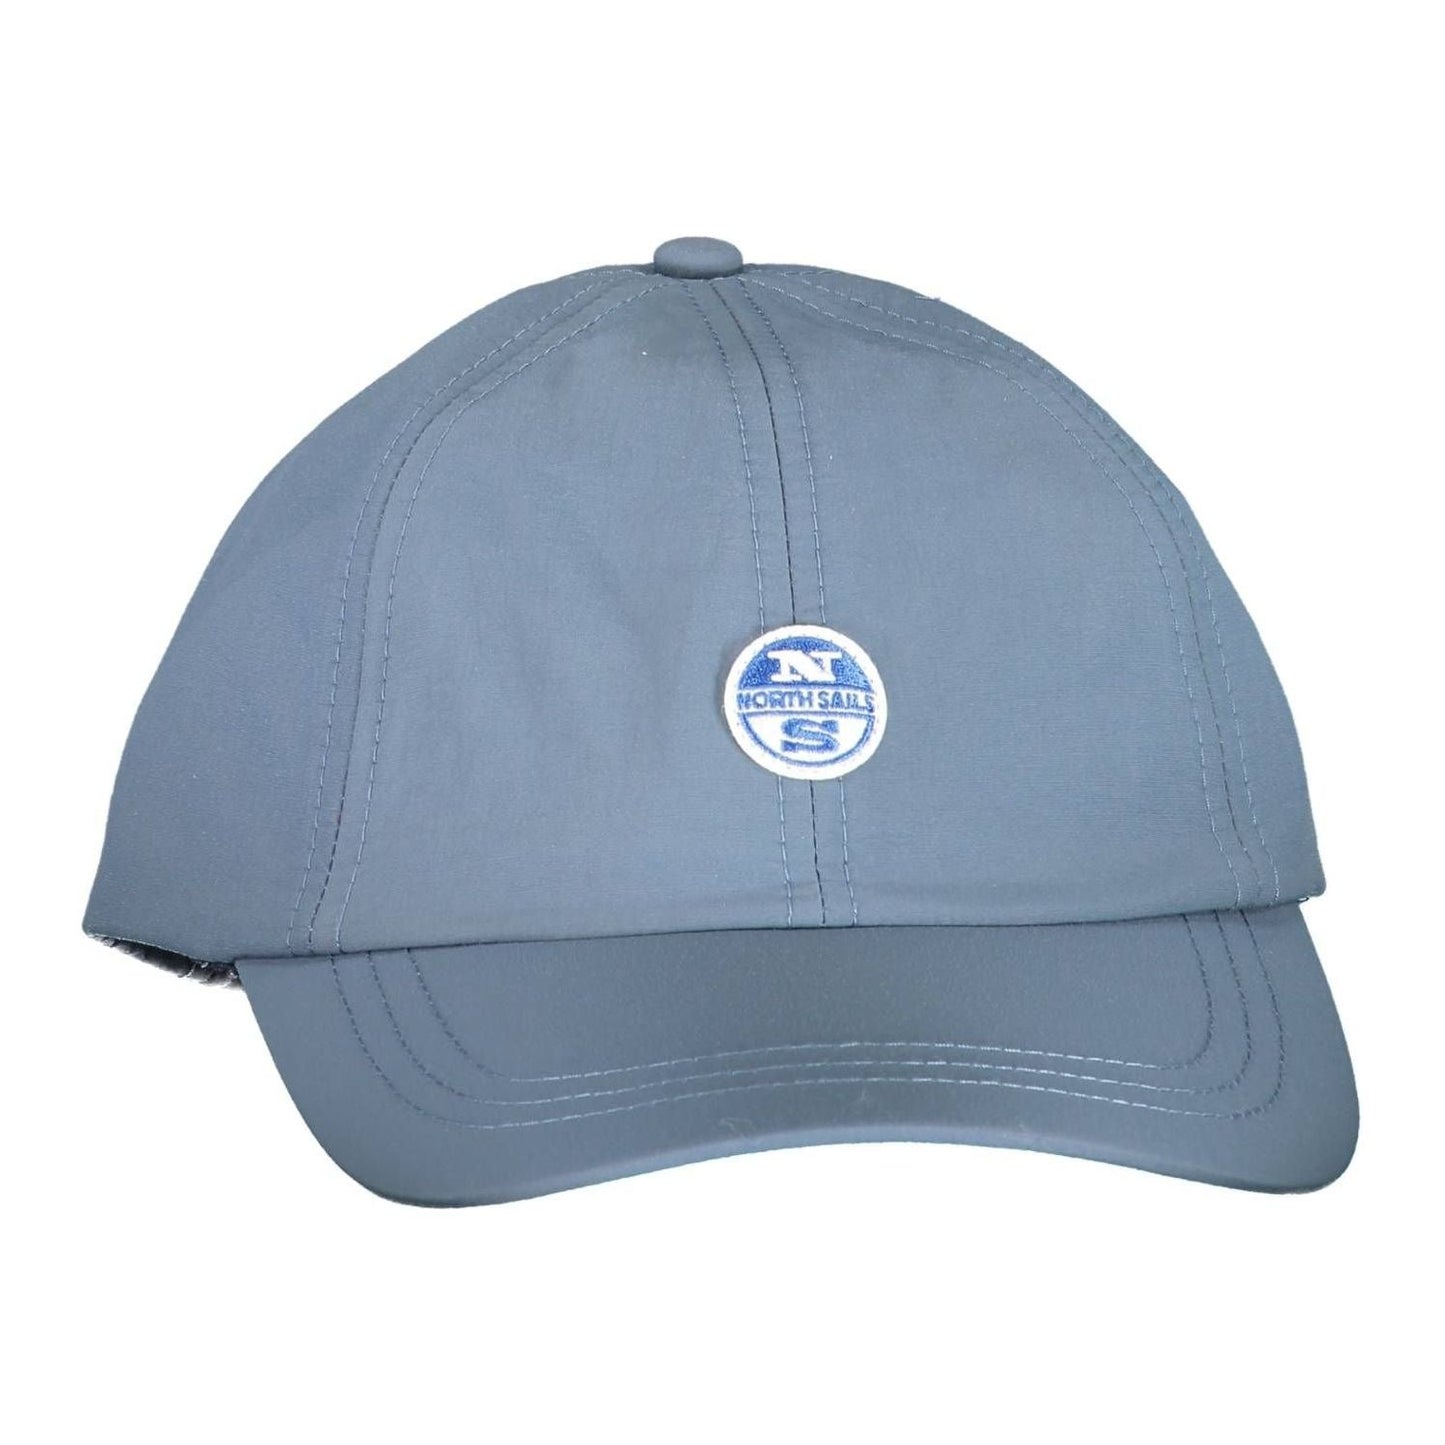 North Sails Chic Blue Visor Cap with Logo Accent chic-blue-visor-cap-with-logo-accent